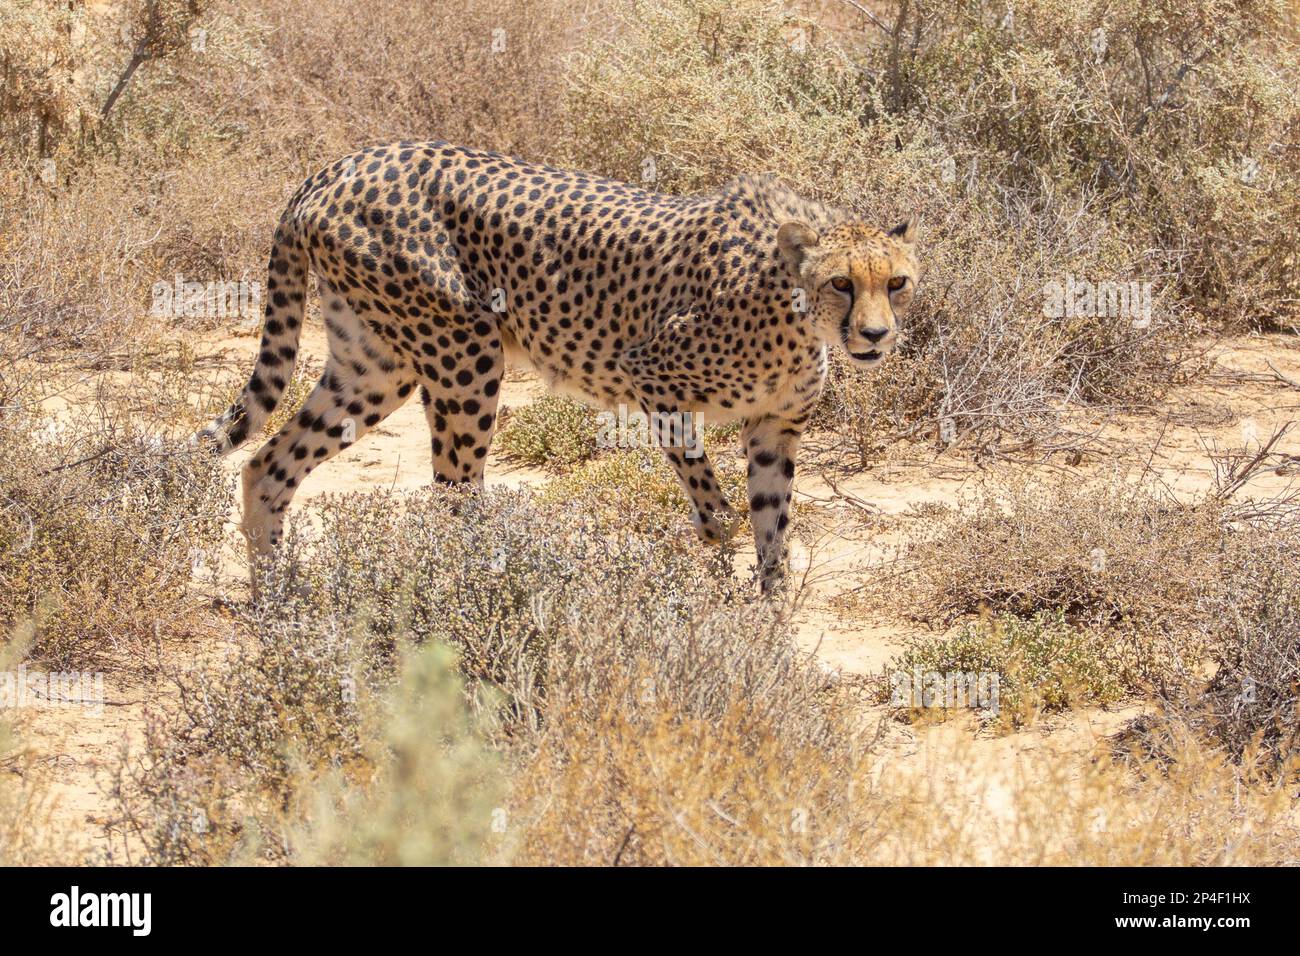 Cheetah in the wild Stock Photo